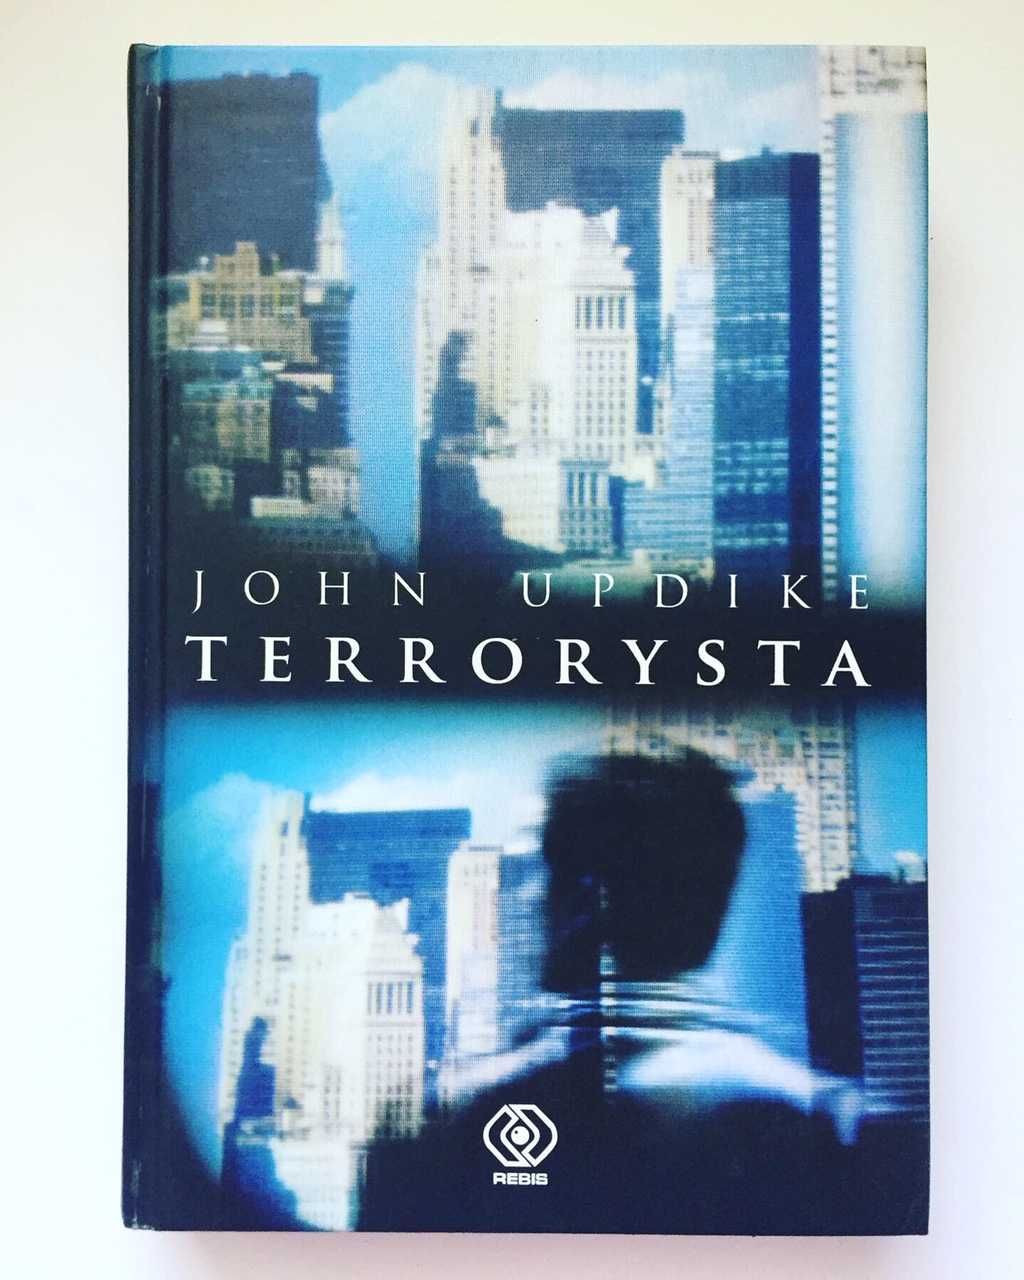 Książka ,,Terrorysta” John Updike